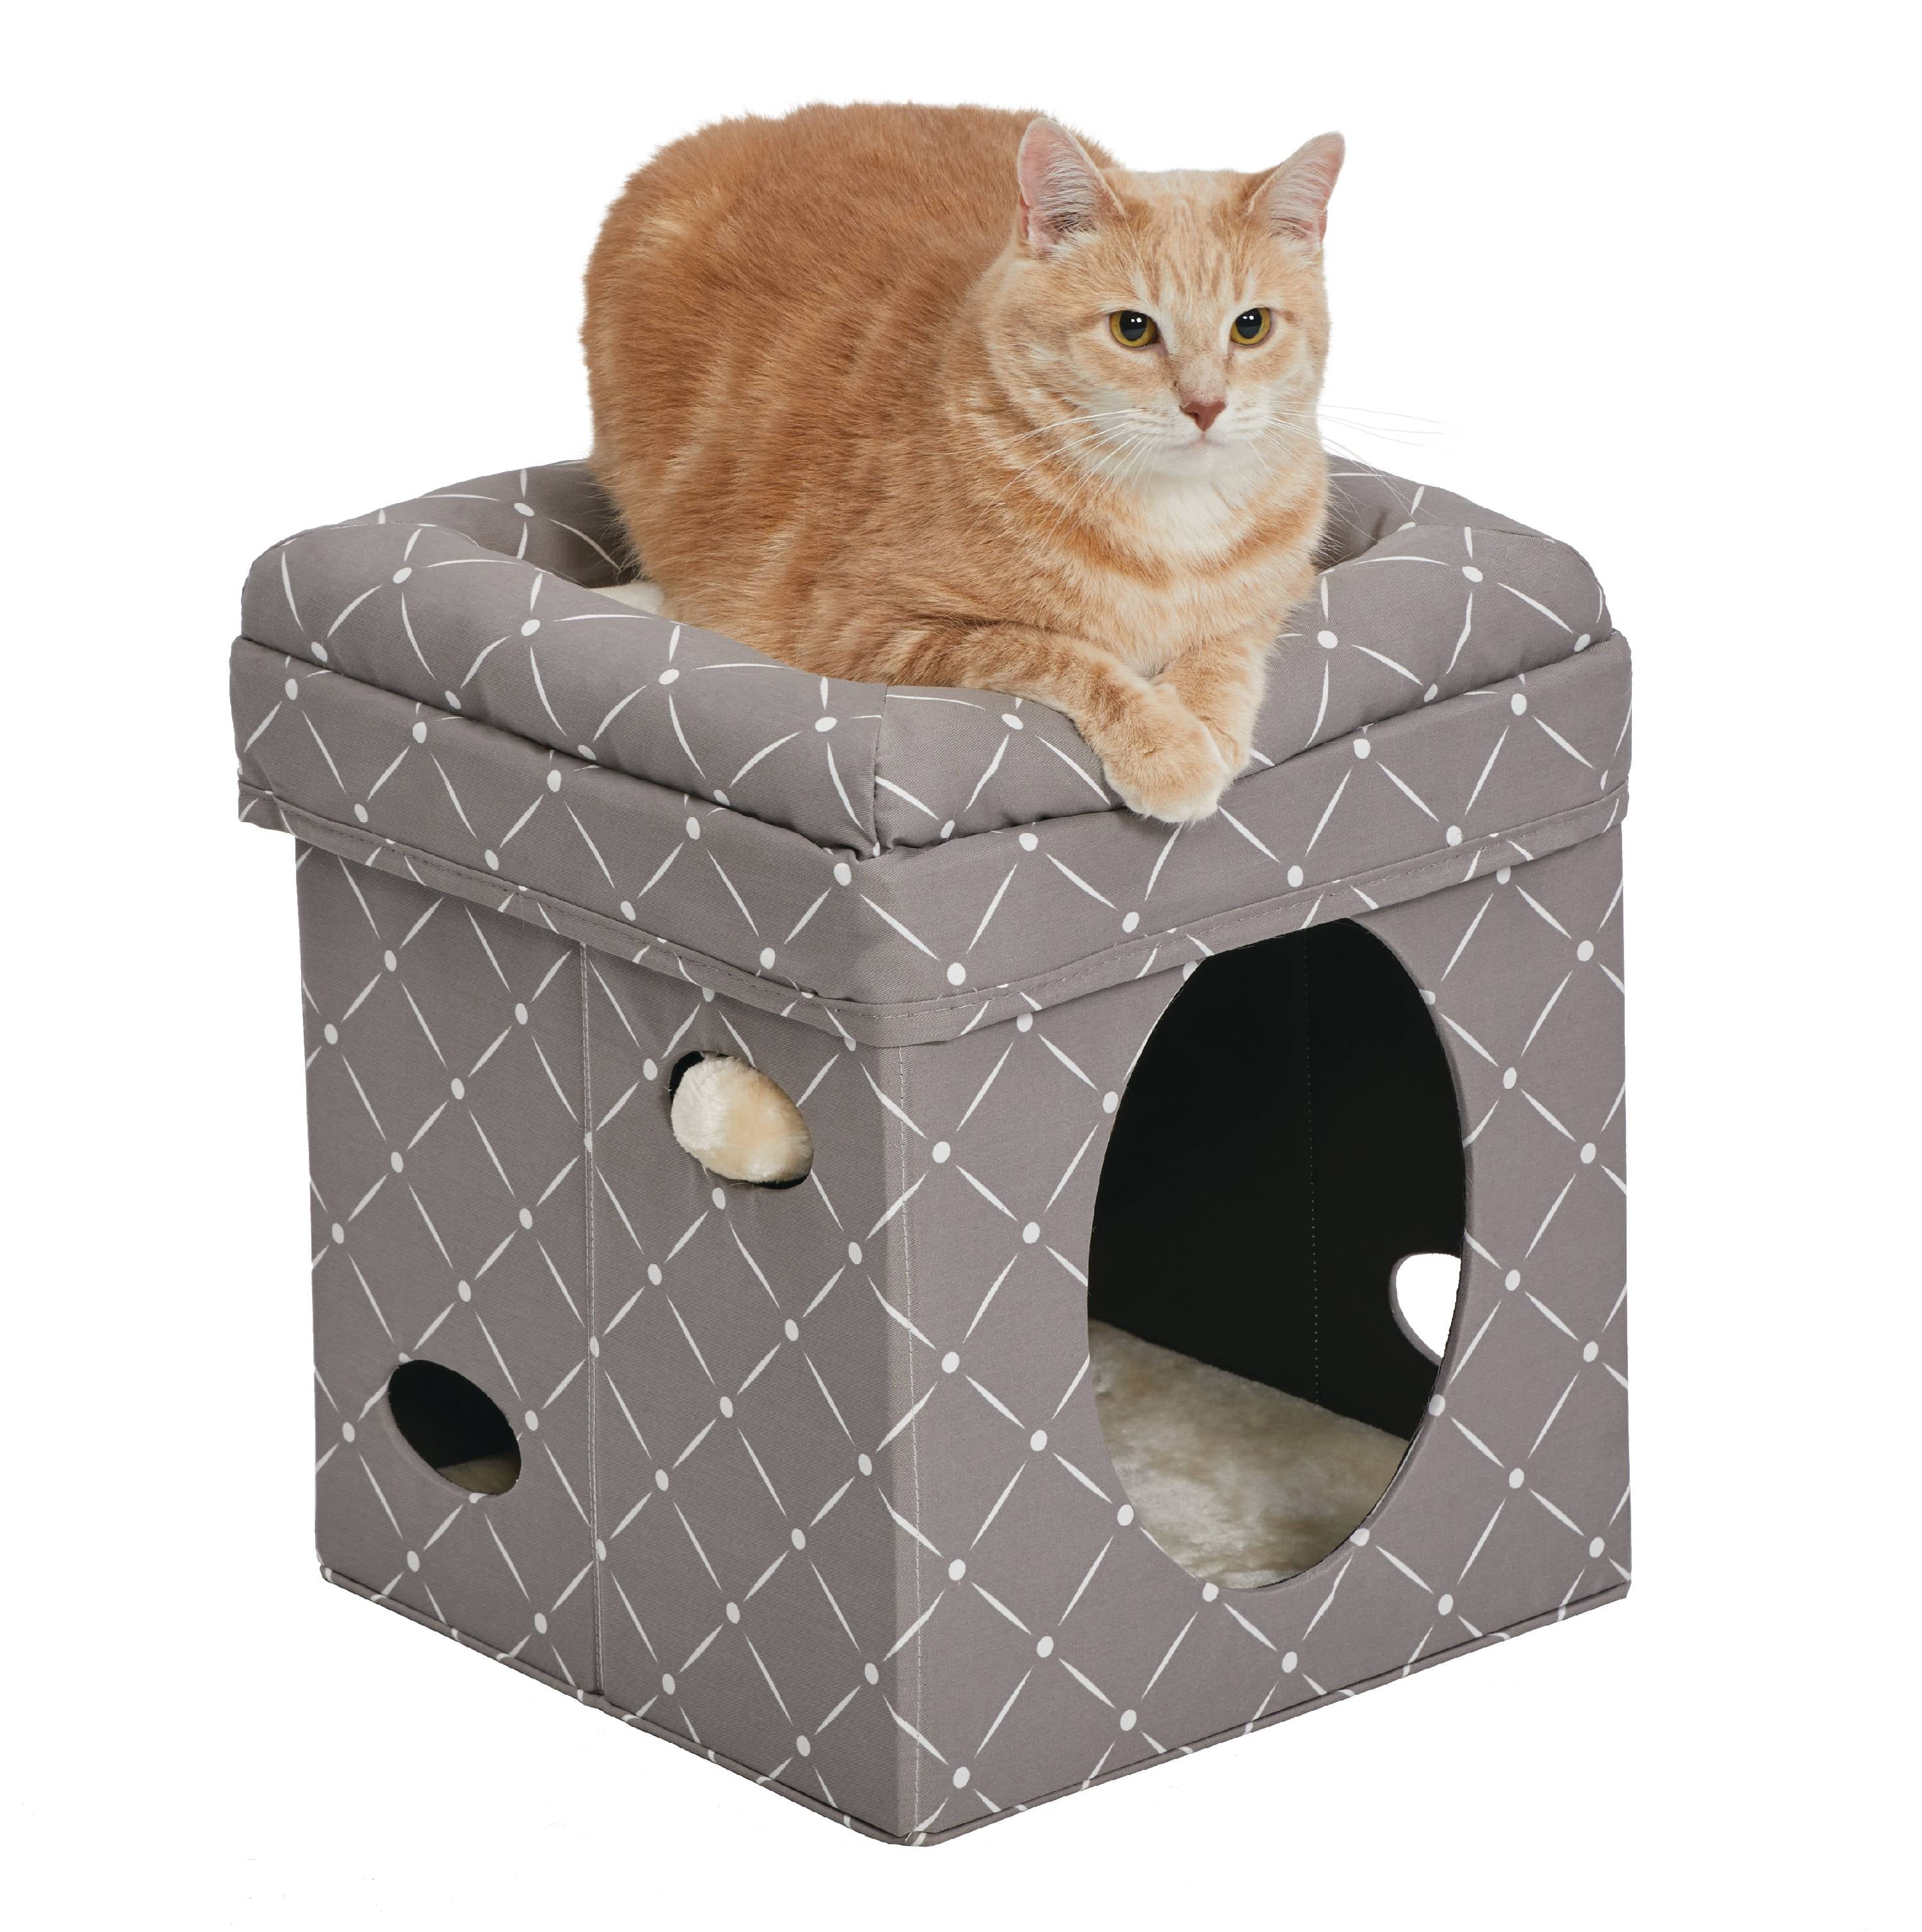 Cube cats. Домик для кошек. Красивые домики для кошек. Большие домики для котов. Прозрачный домик для кошки.